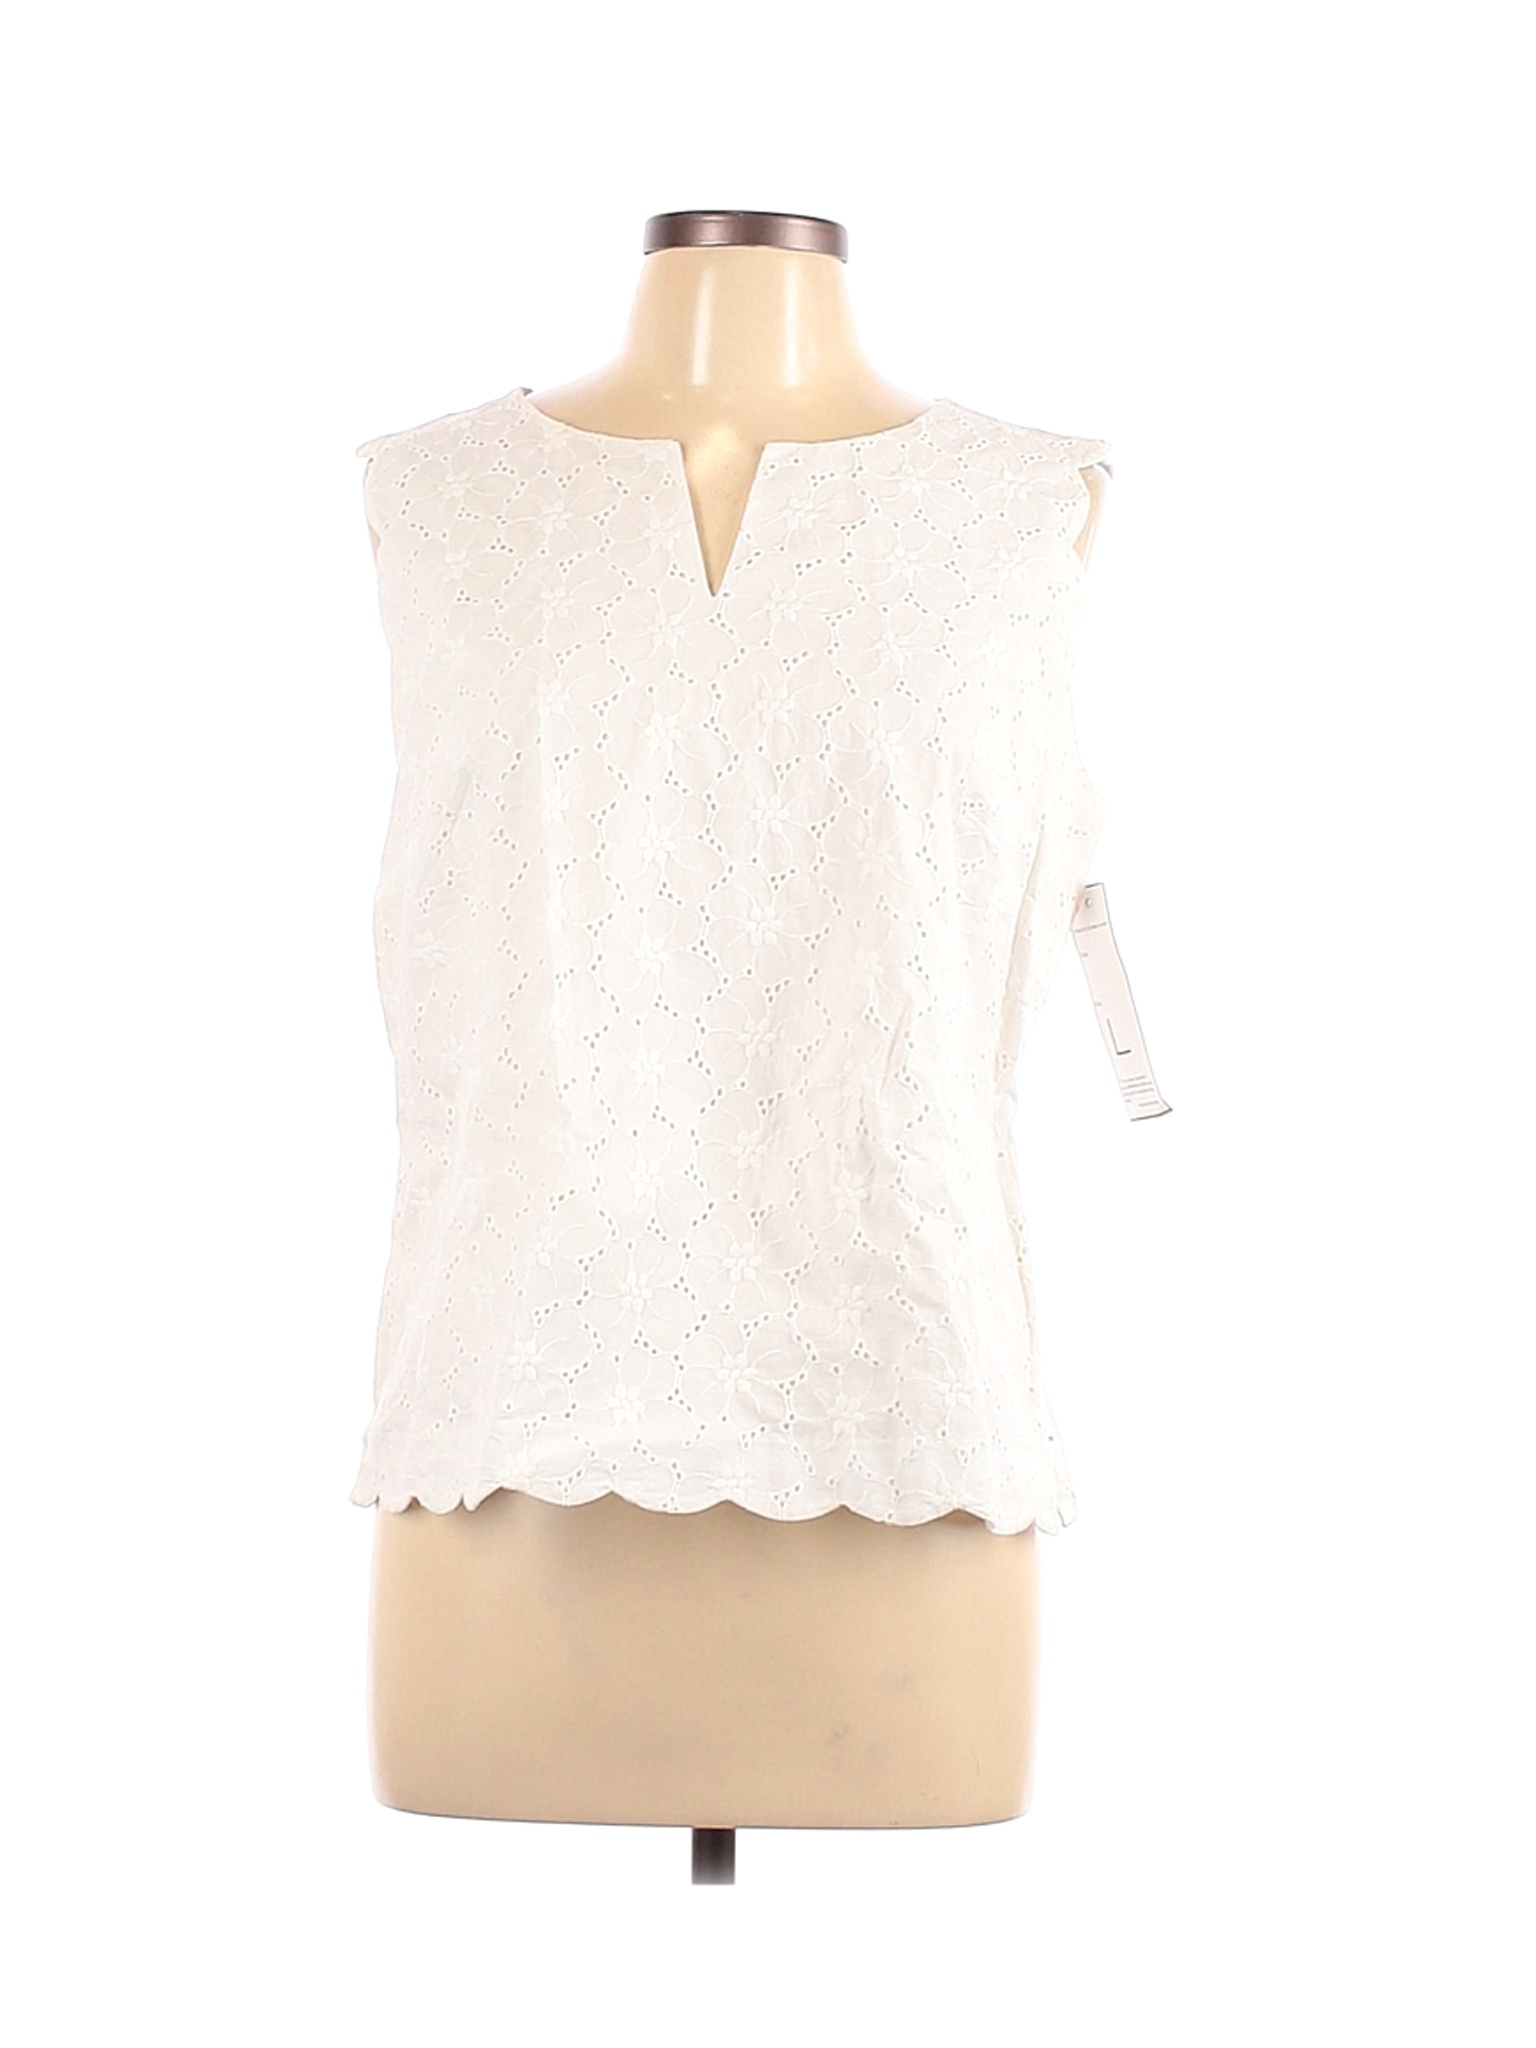 NWT Talbots Women White Short Sleeve Blouse L | eBay